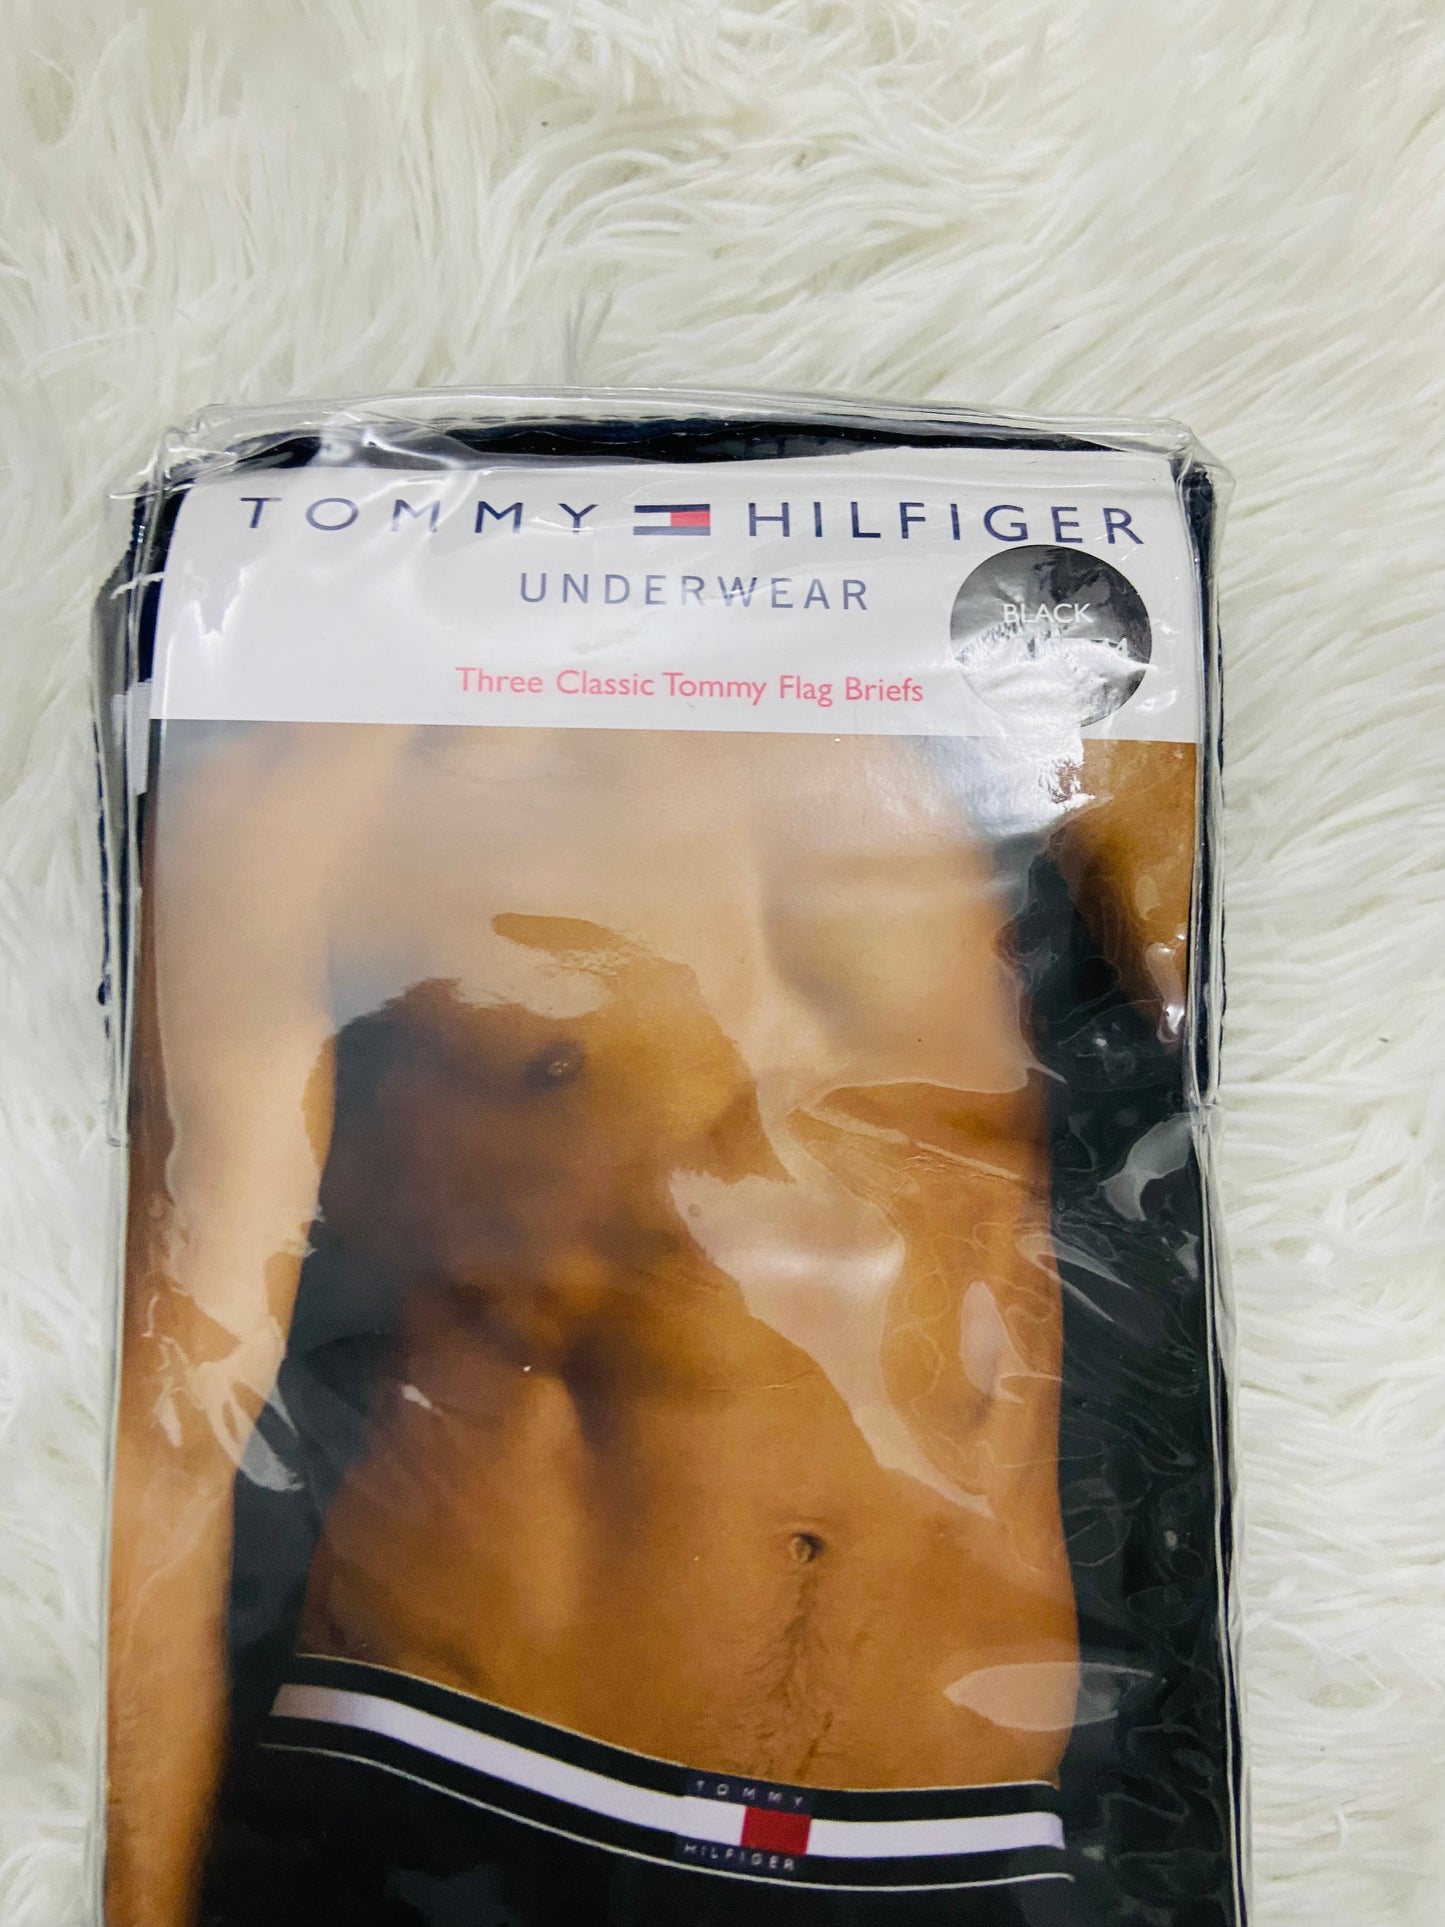 Set de 3 Bóxer briefs Tommy Hilfiger original negro estilo pantaloncillo.